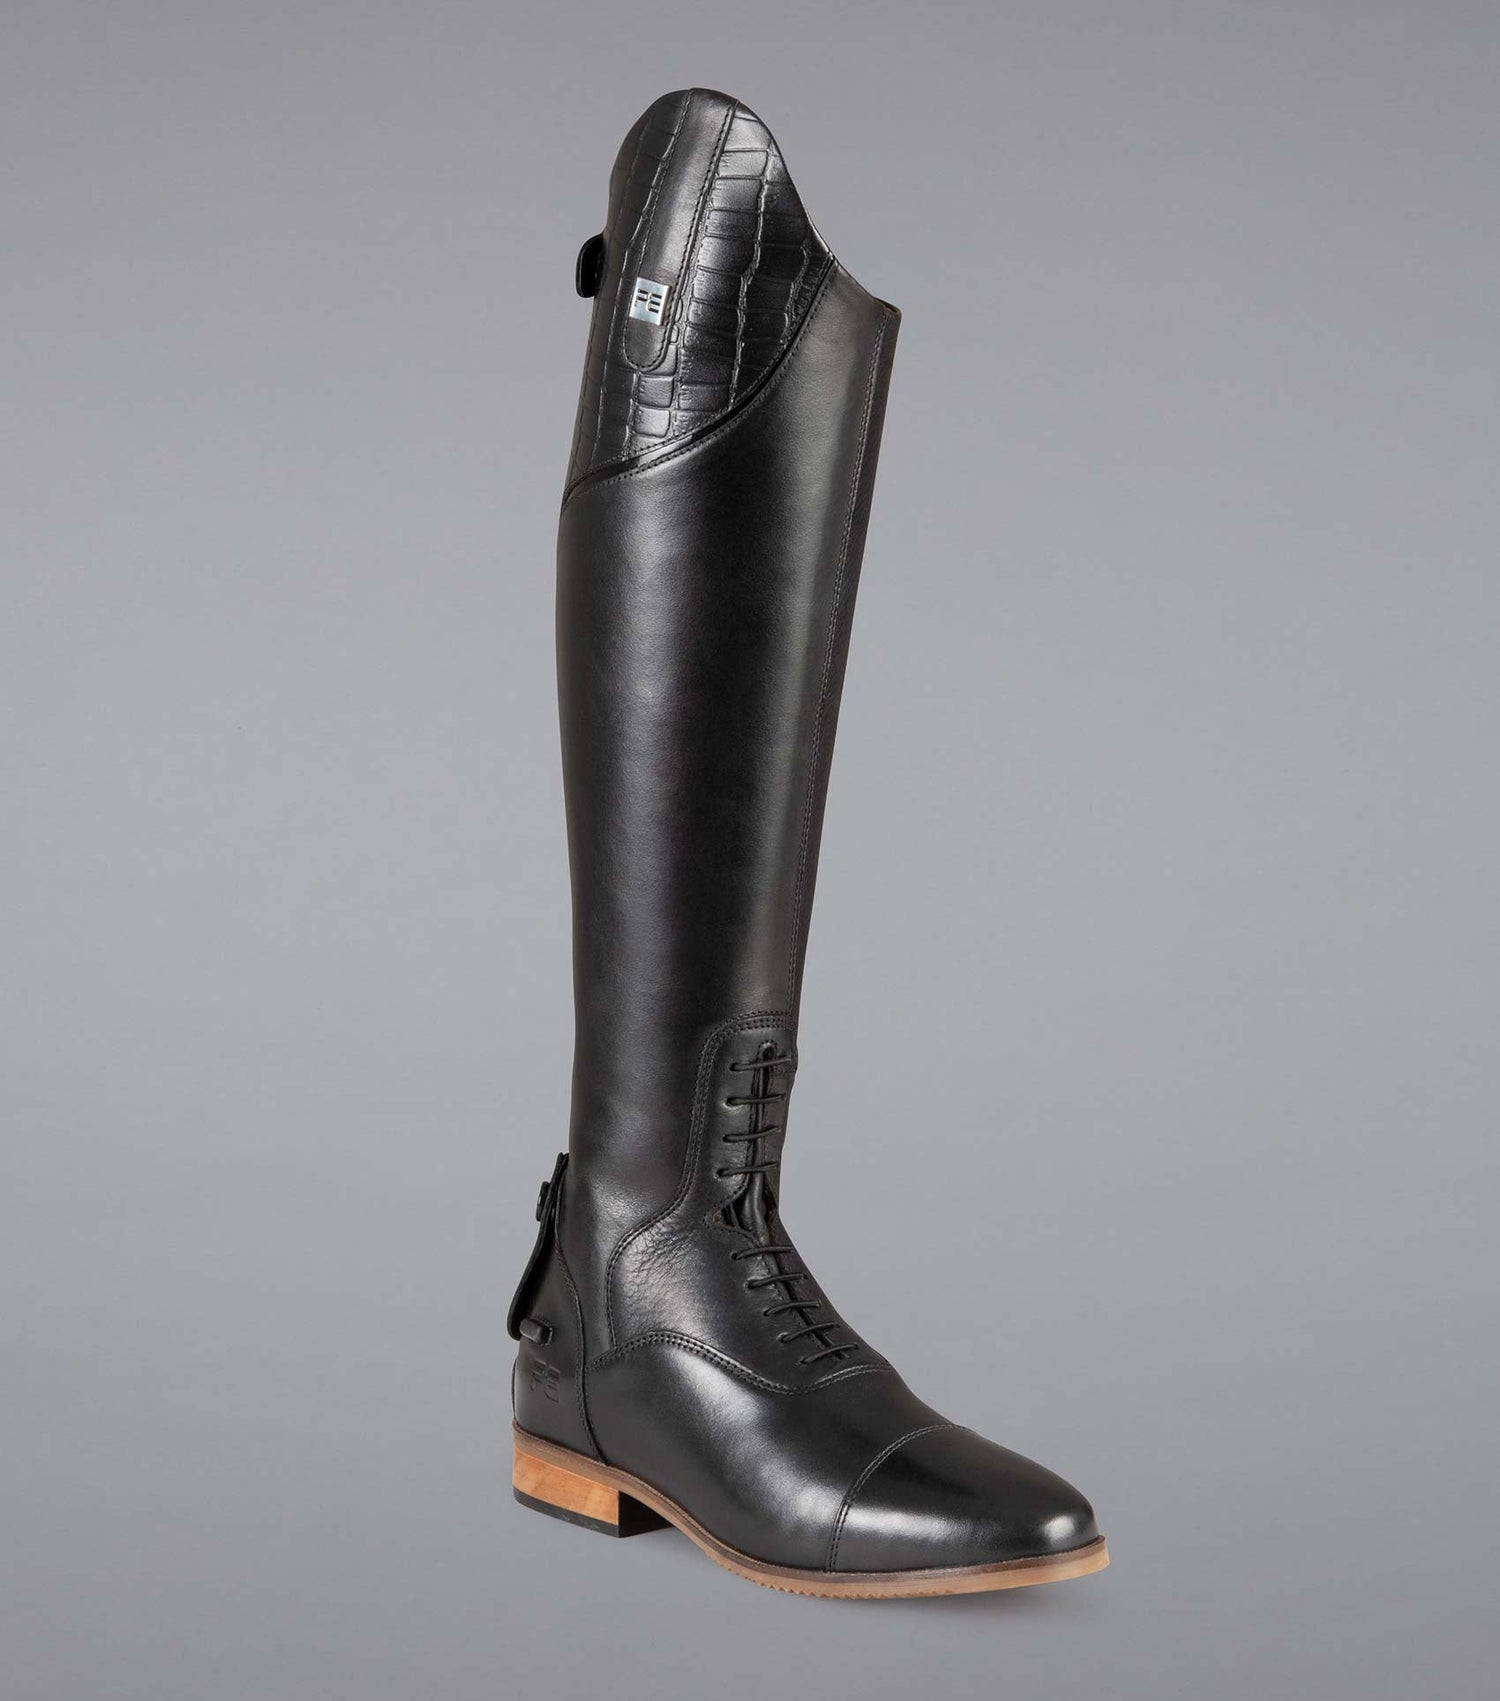 Description:Passaggio Ladies Leather Field Tall Riding Boot_Colour:Black_Position:1